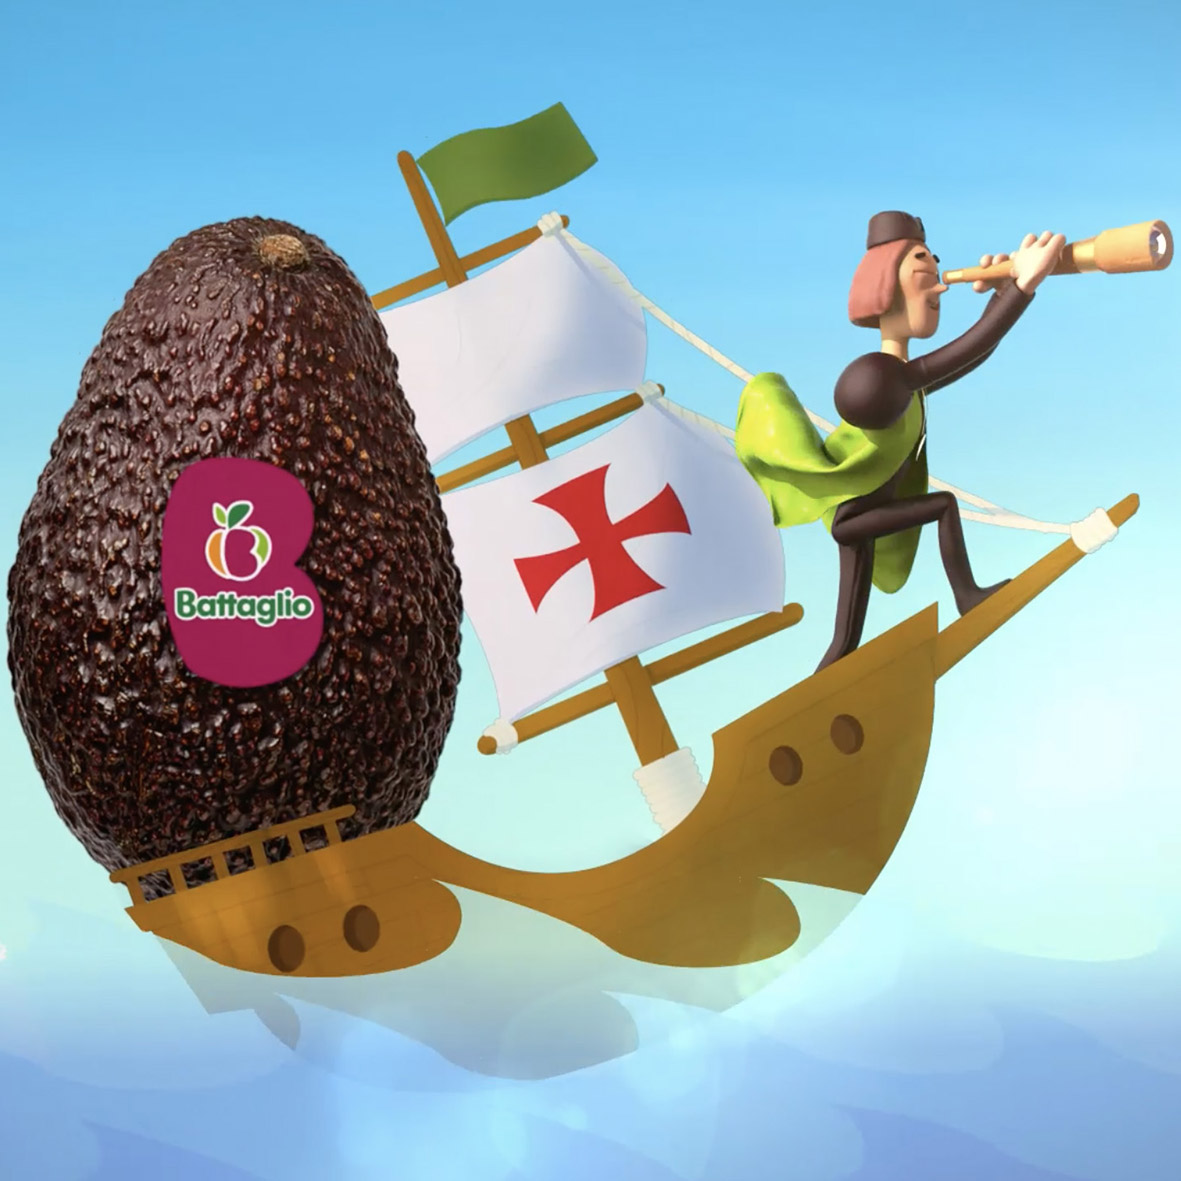 The Hass avocado Battaglio debuts on television in Italy